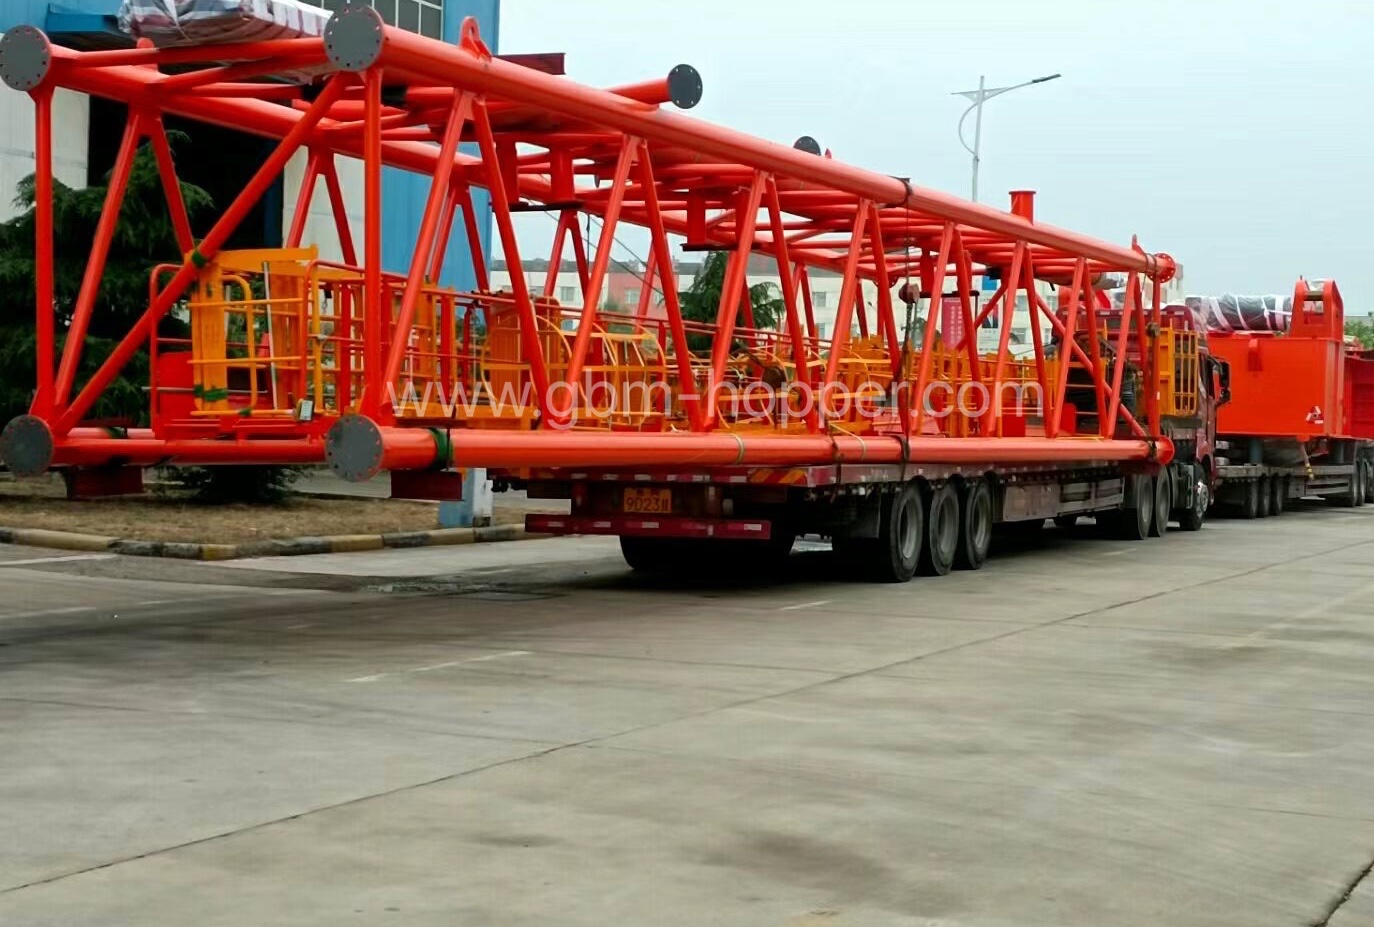 GBM 60T@52M portal mobile crane will delivery to Damman.